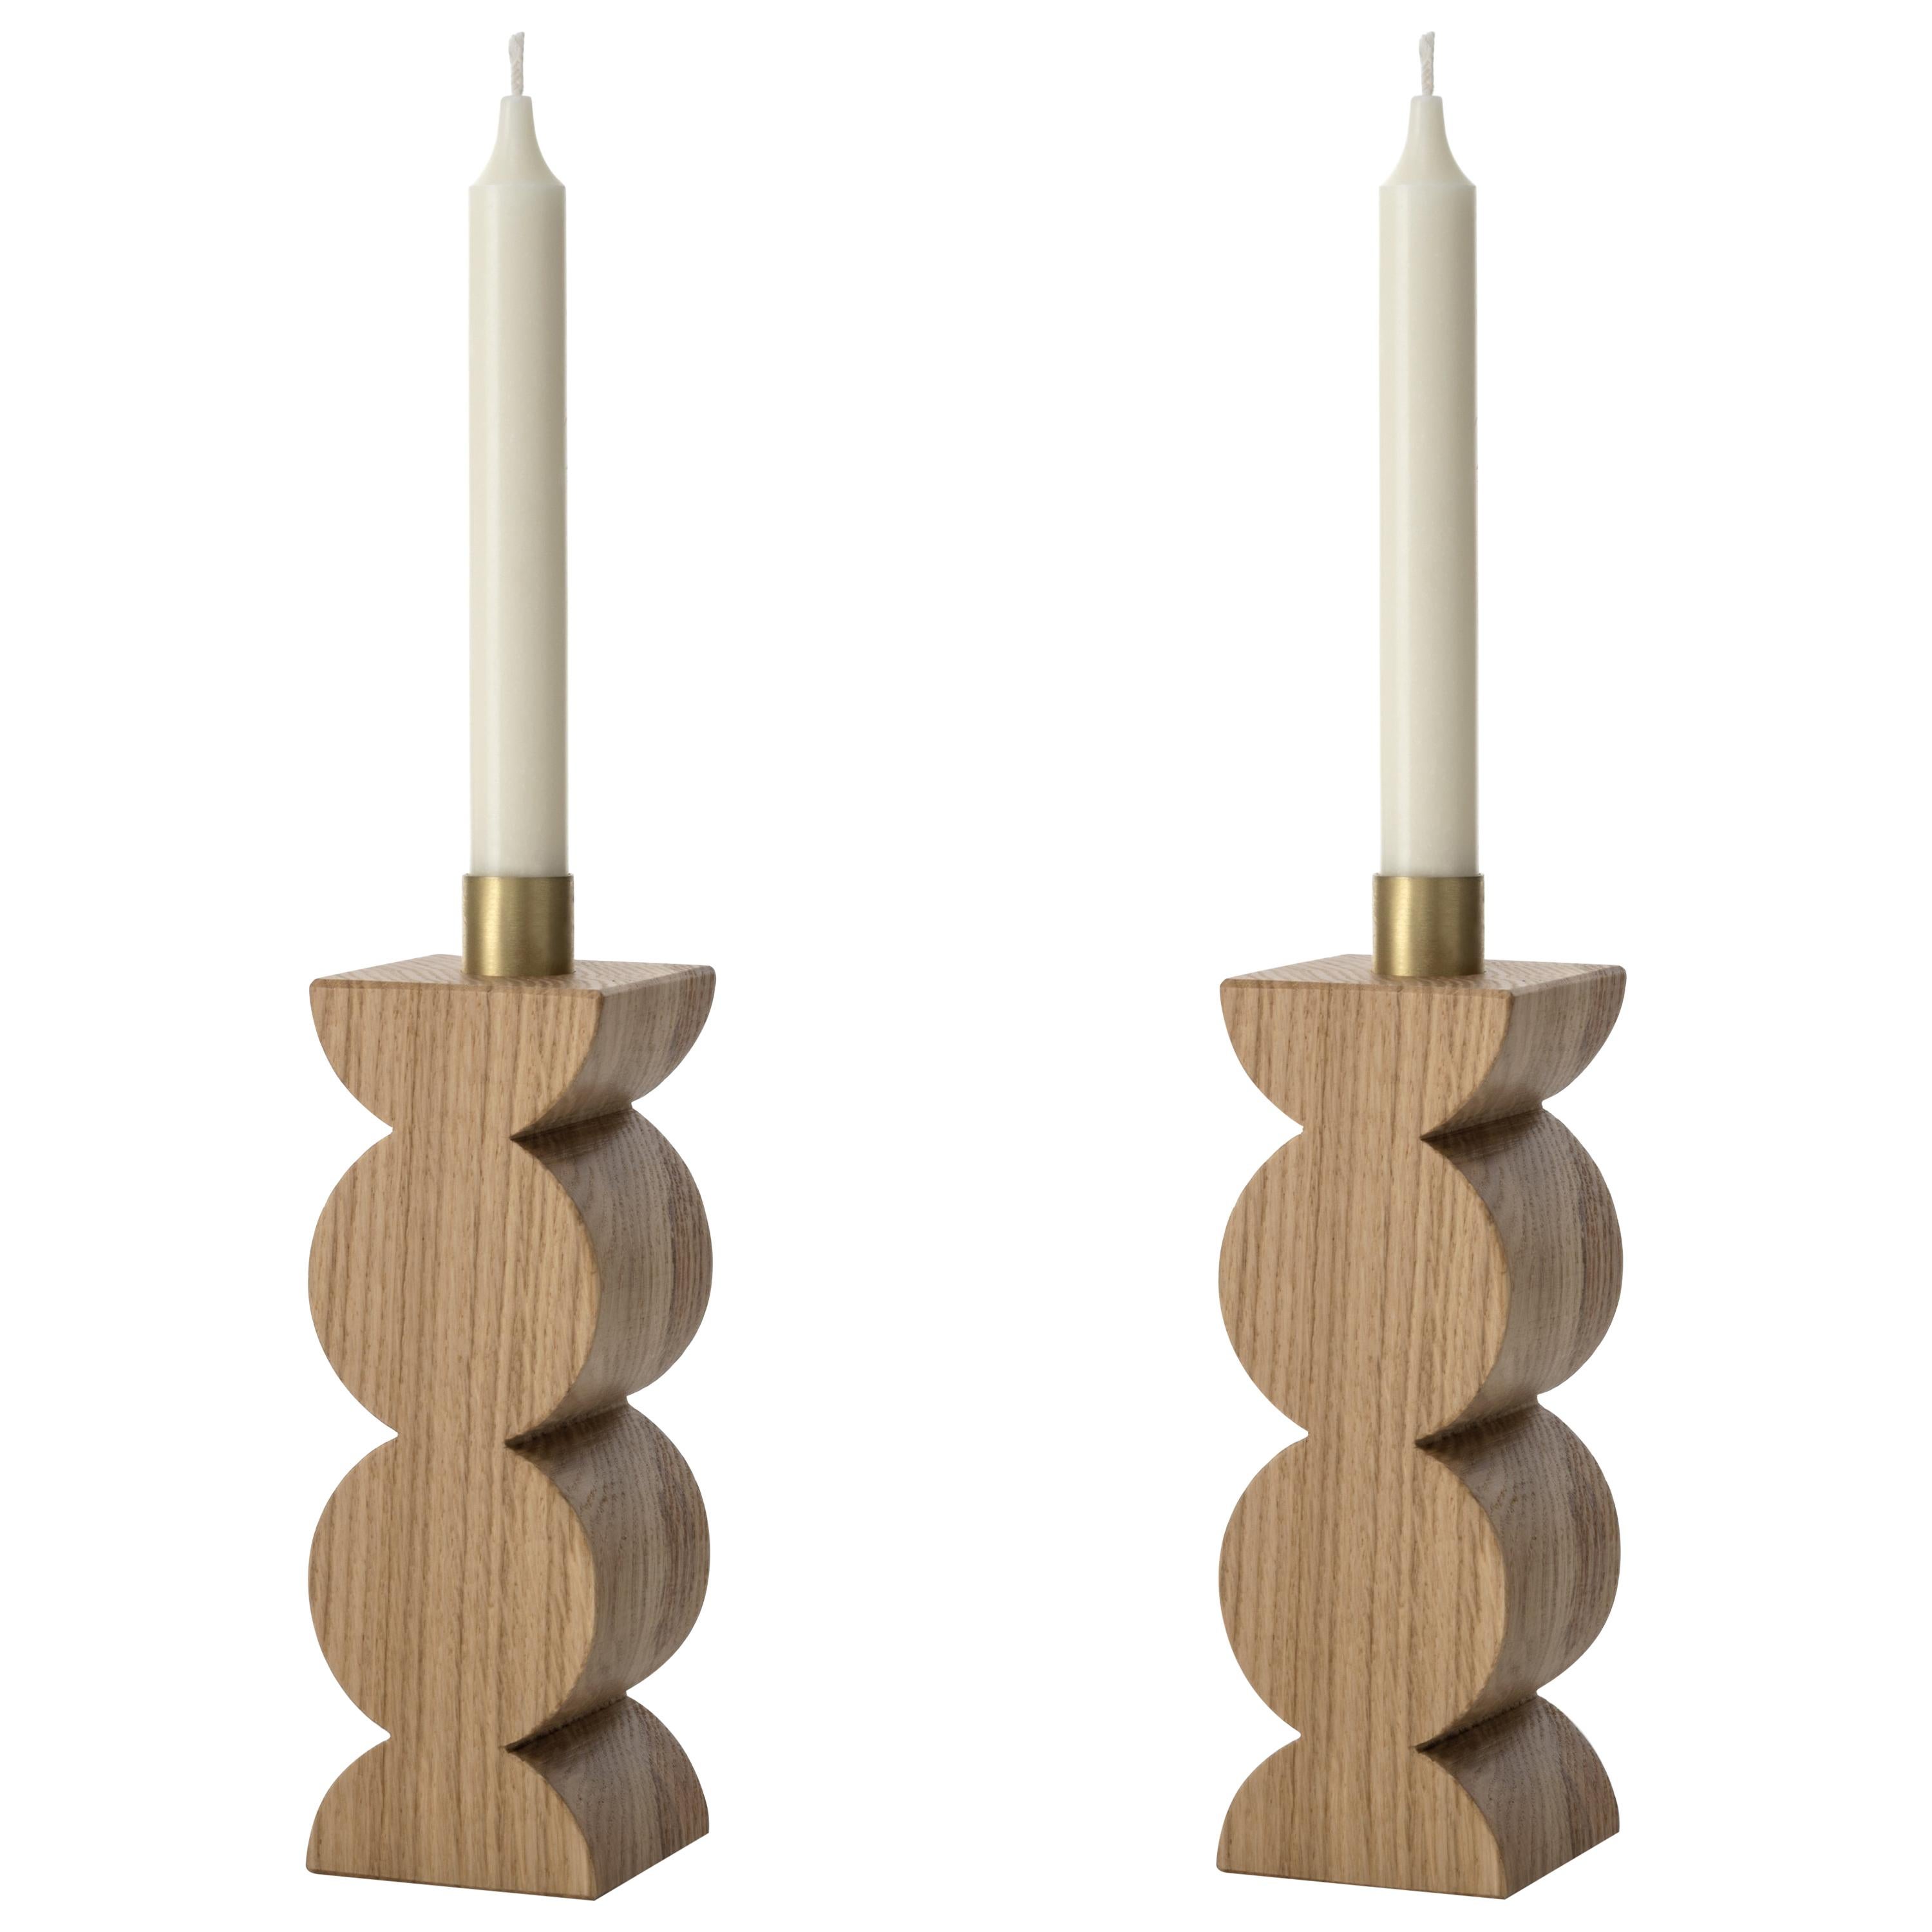 Set of two minimal design candlesticks